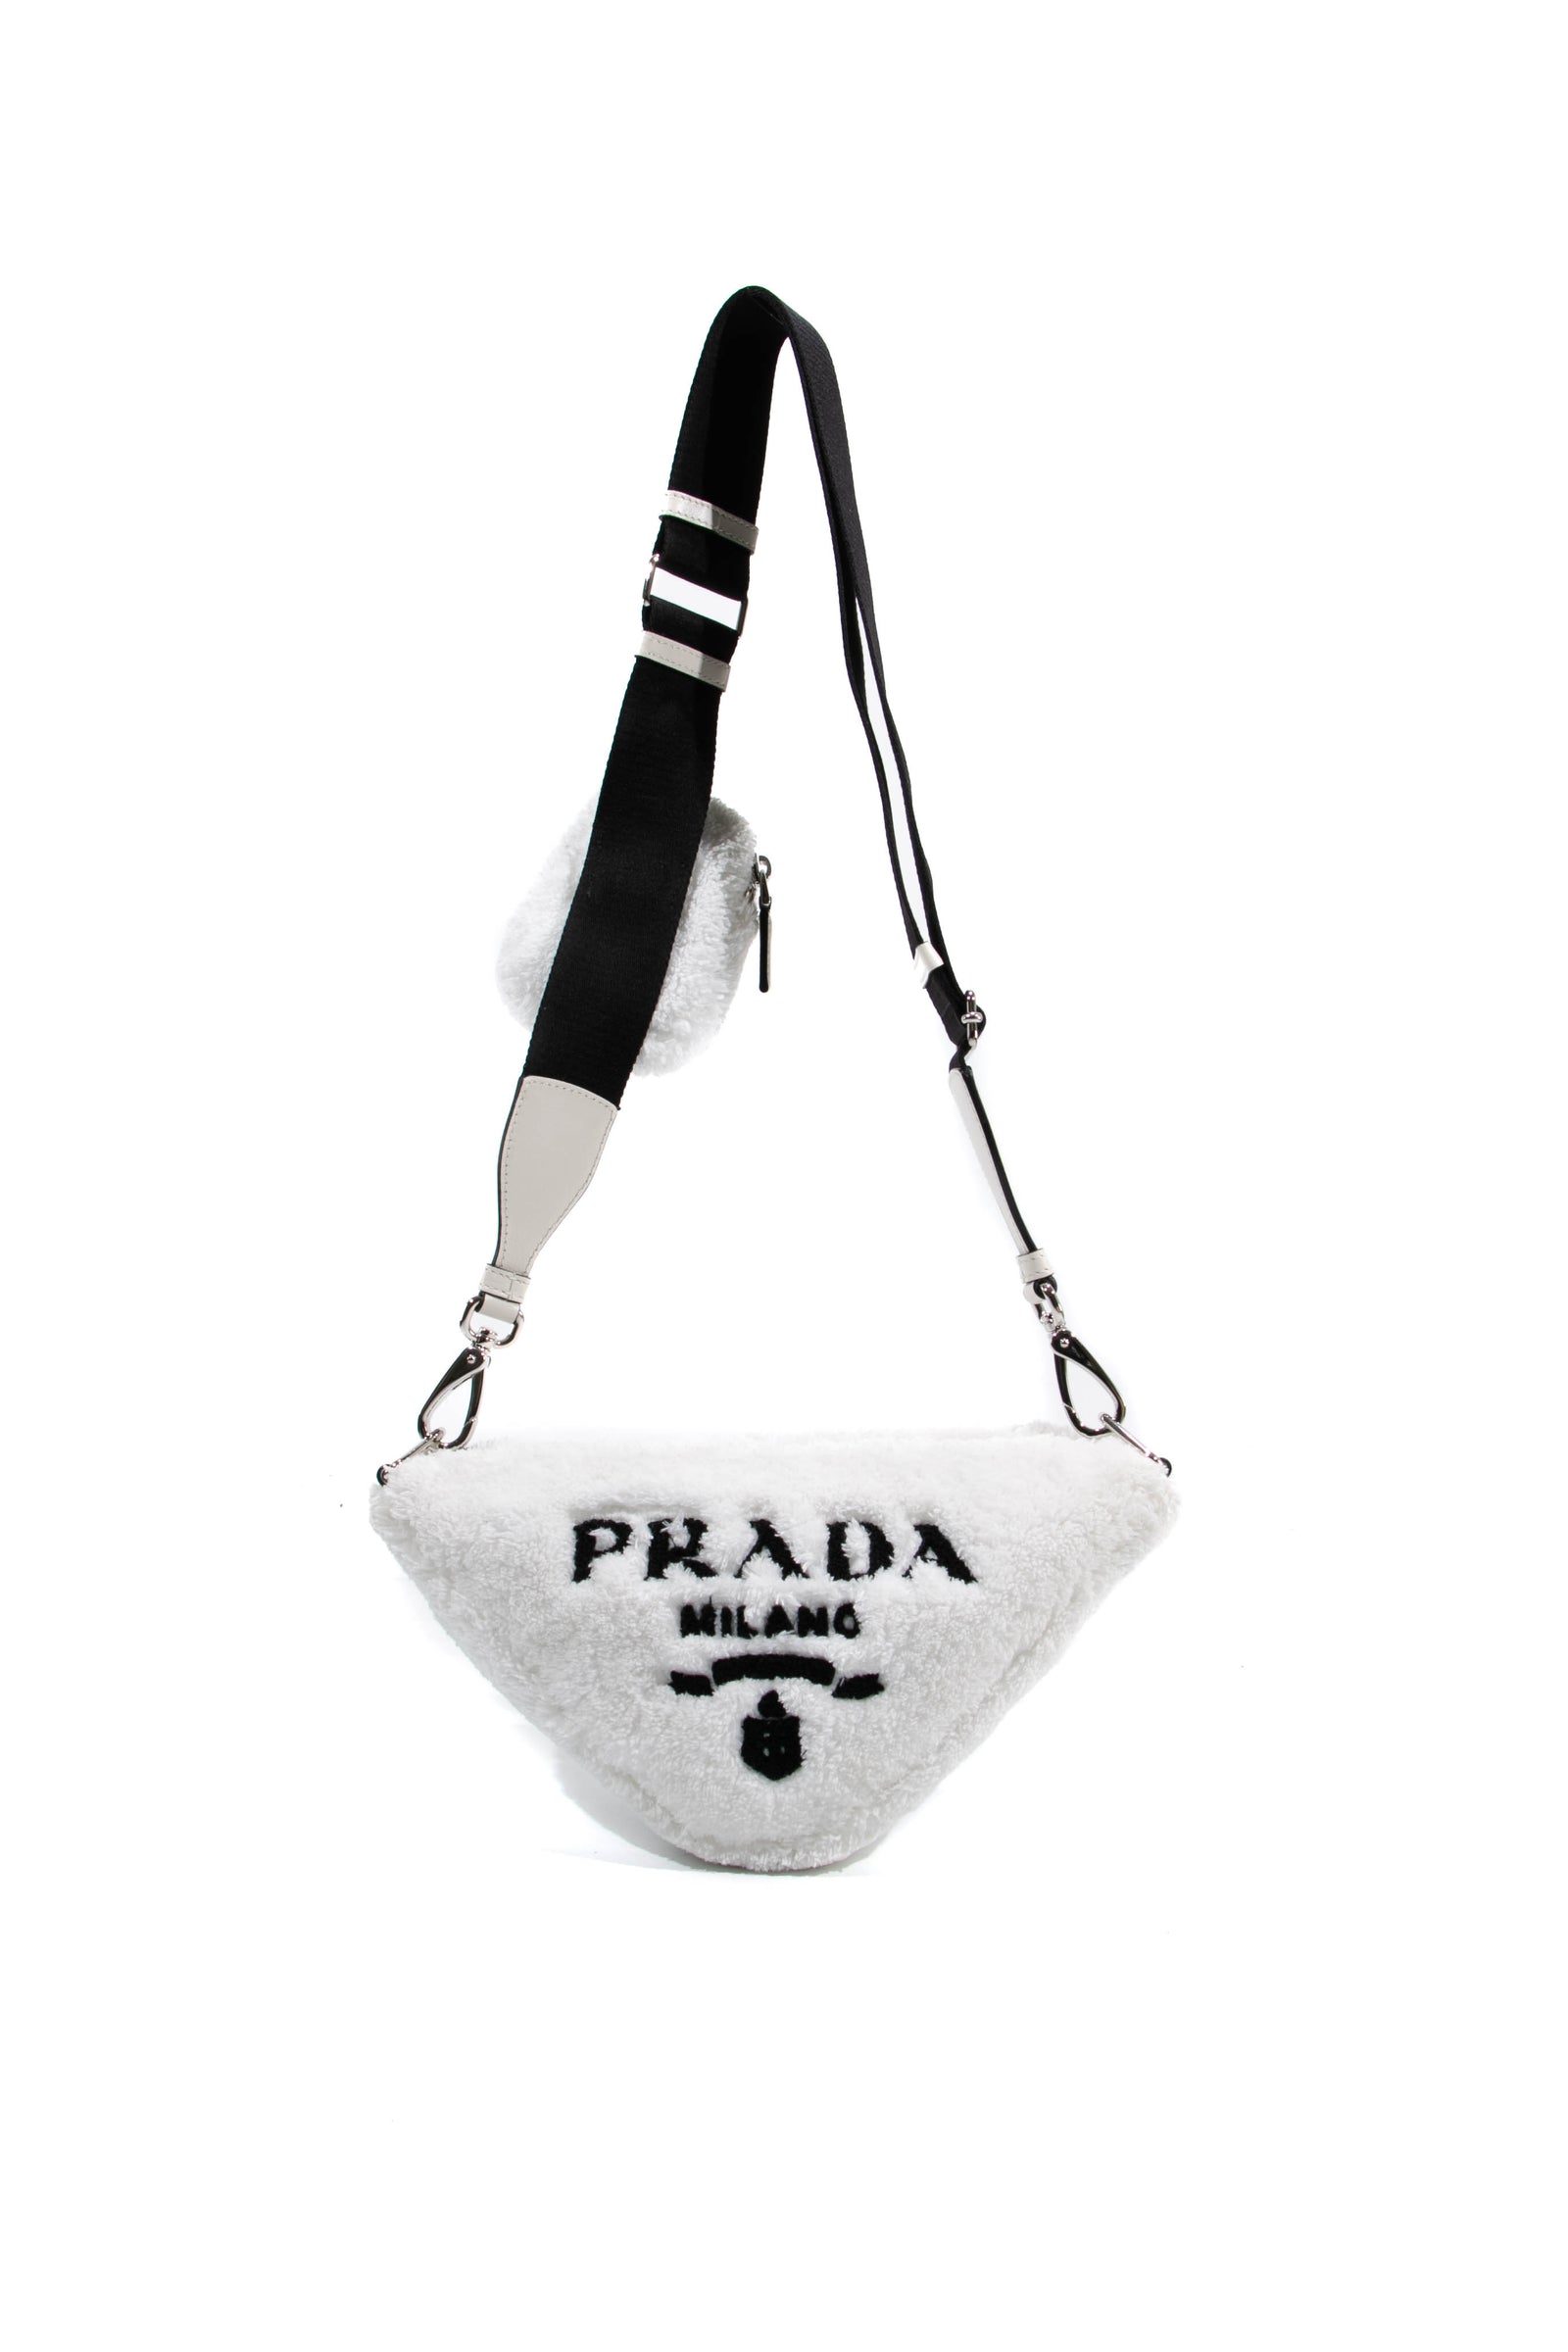 Prada panther rock bag collector edition limited 2018 - Katheley's